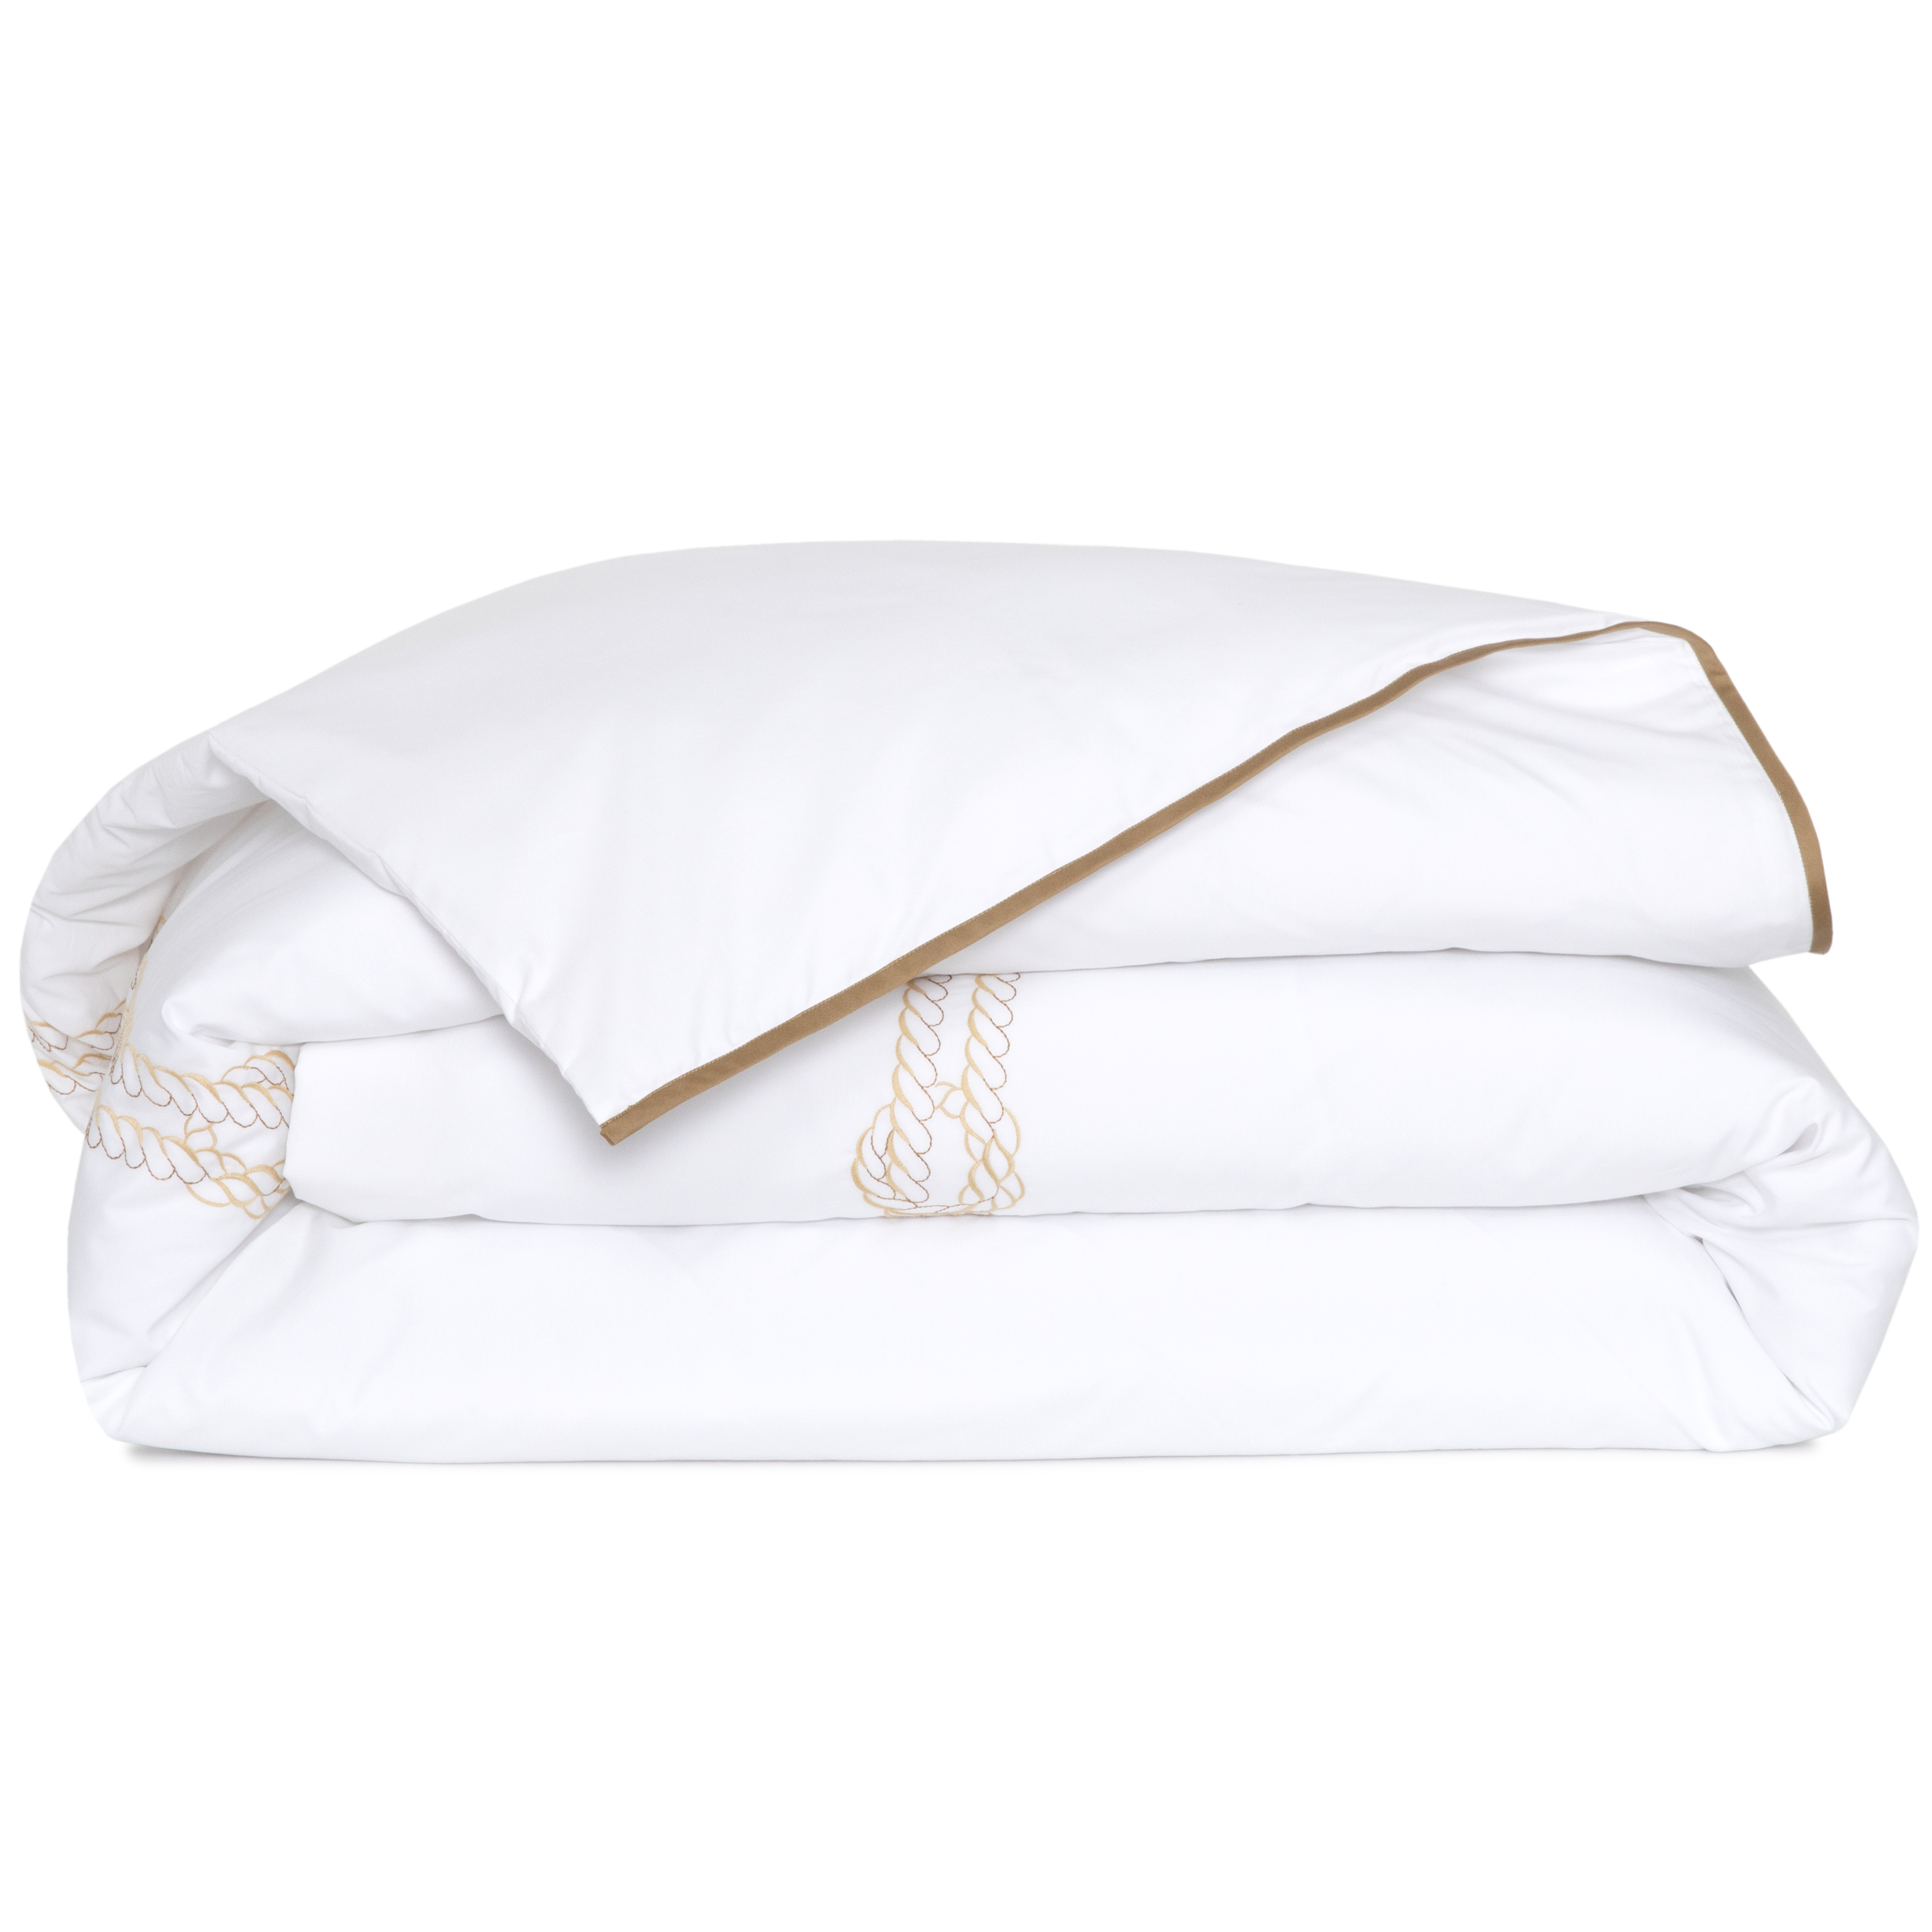 BOSS Home Monogram - Luxury Decorative Pillow - Yves Delorme